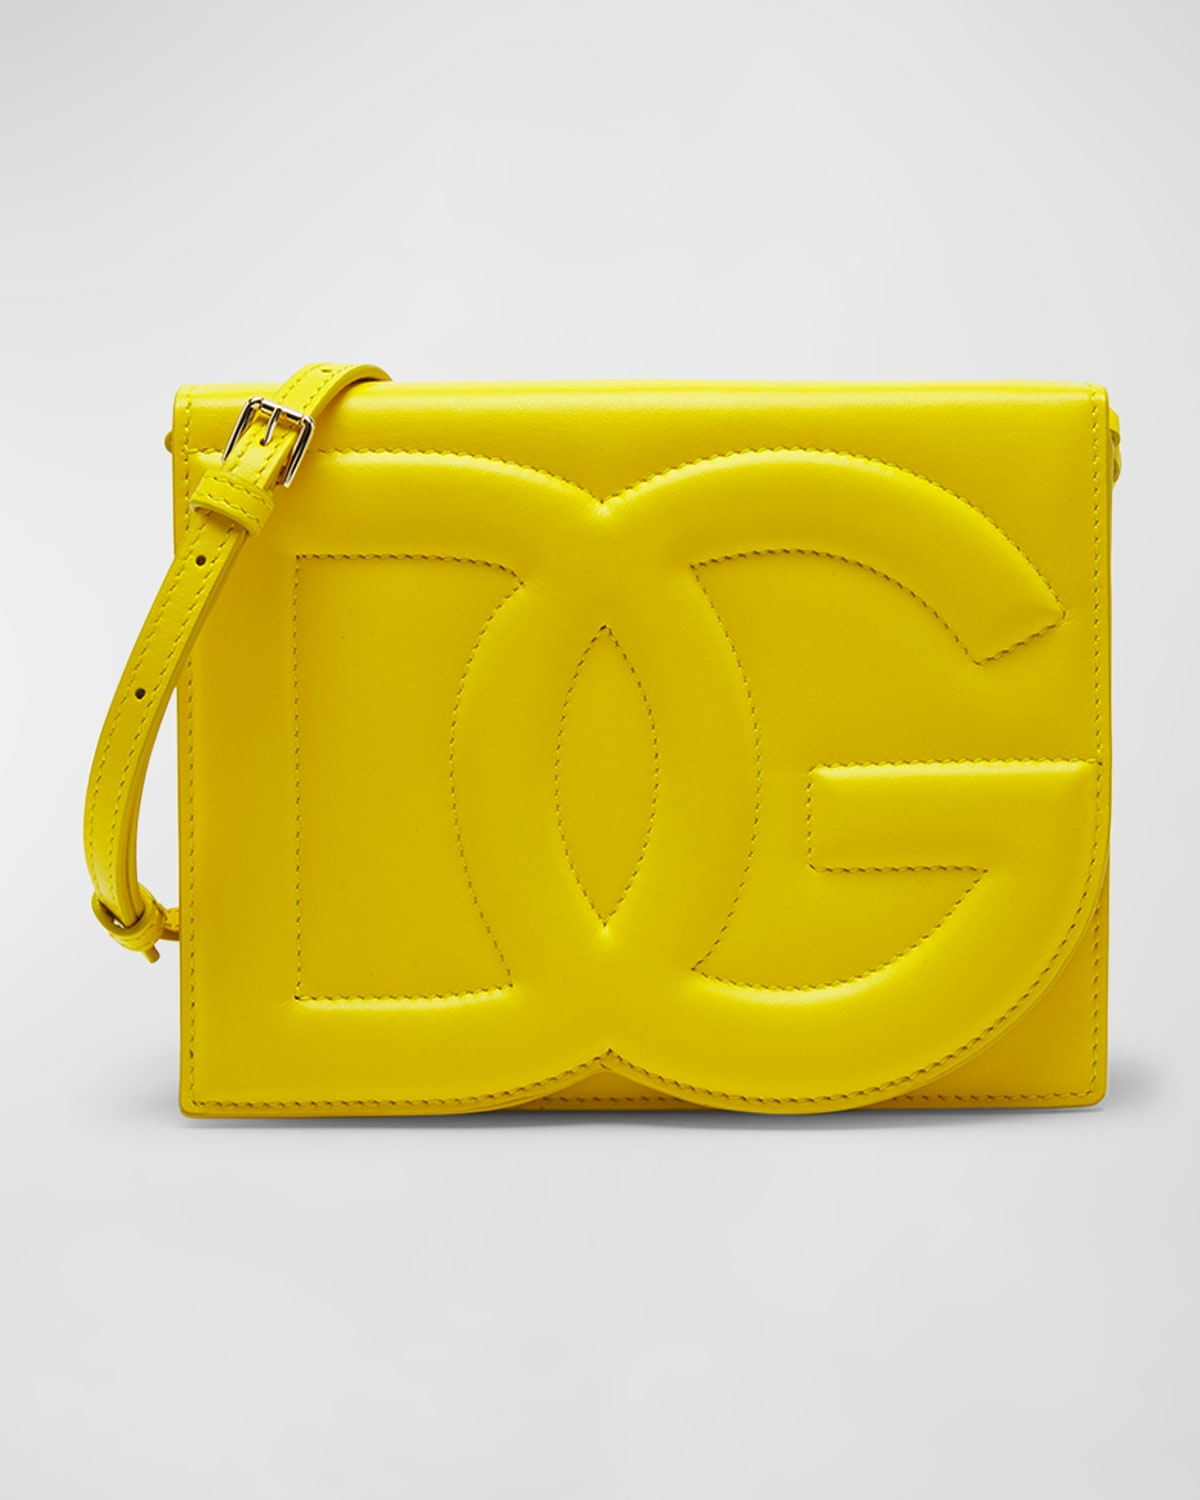 Dolce & Gabbana Dg Logo Flap Leather Shoulder Bag In Giallo Oro